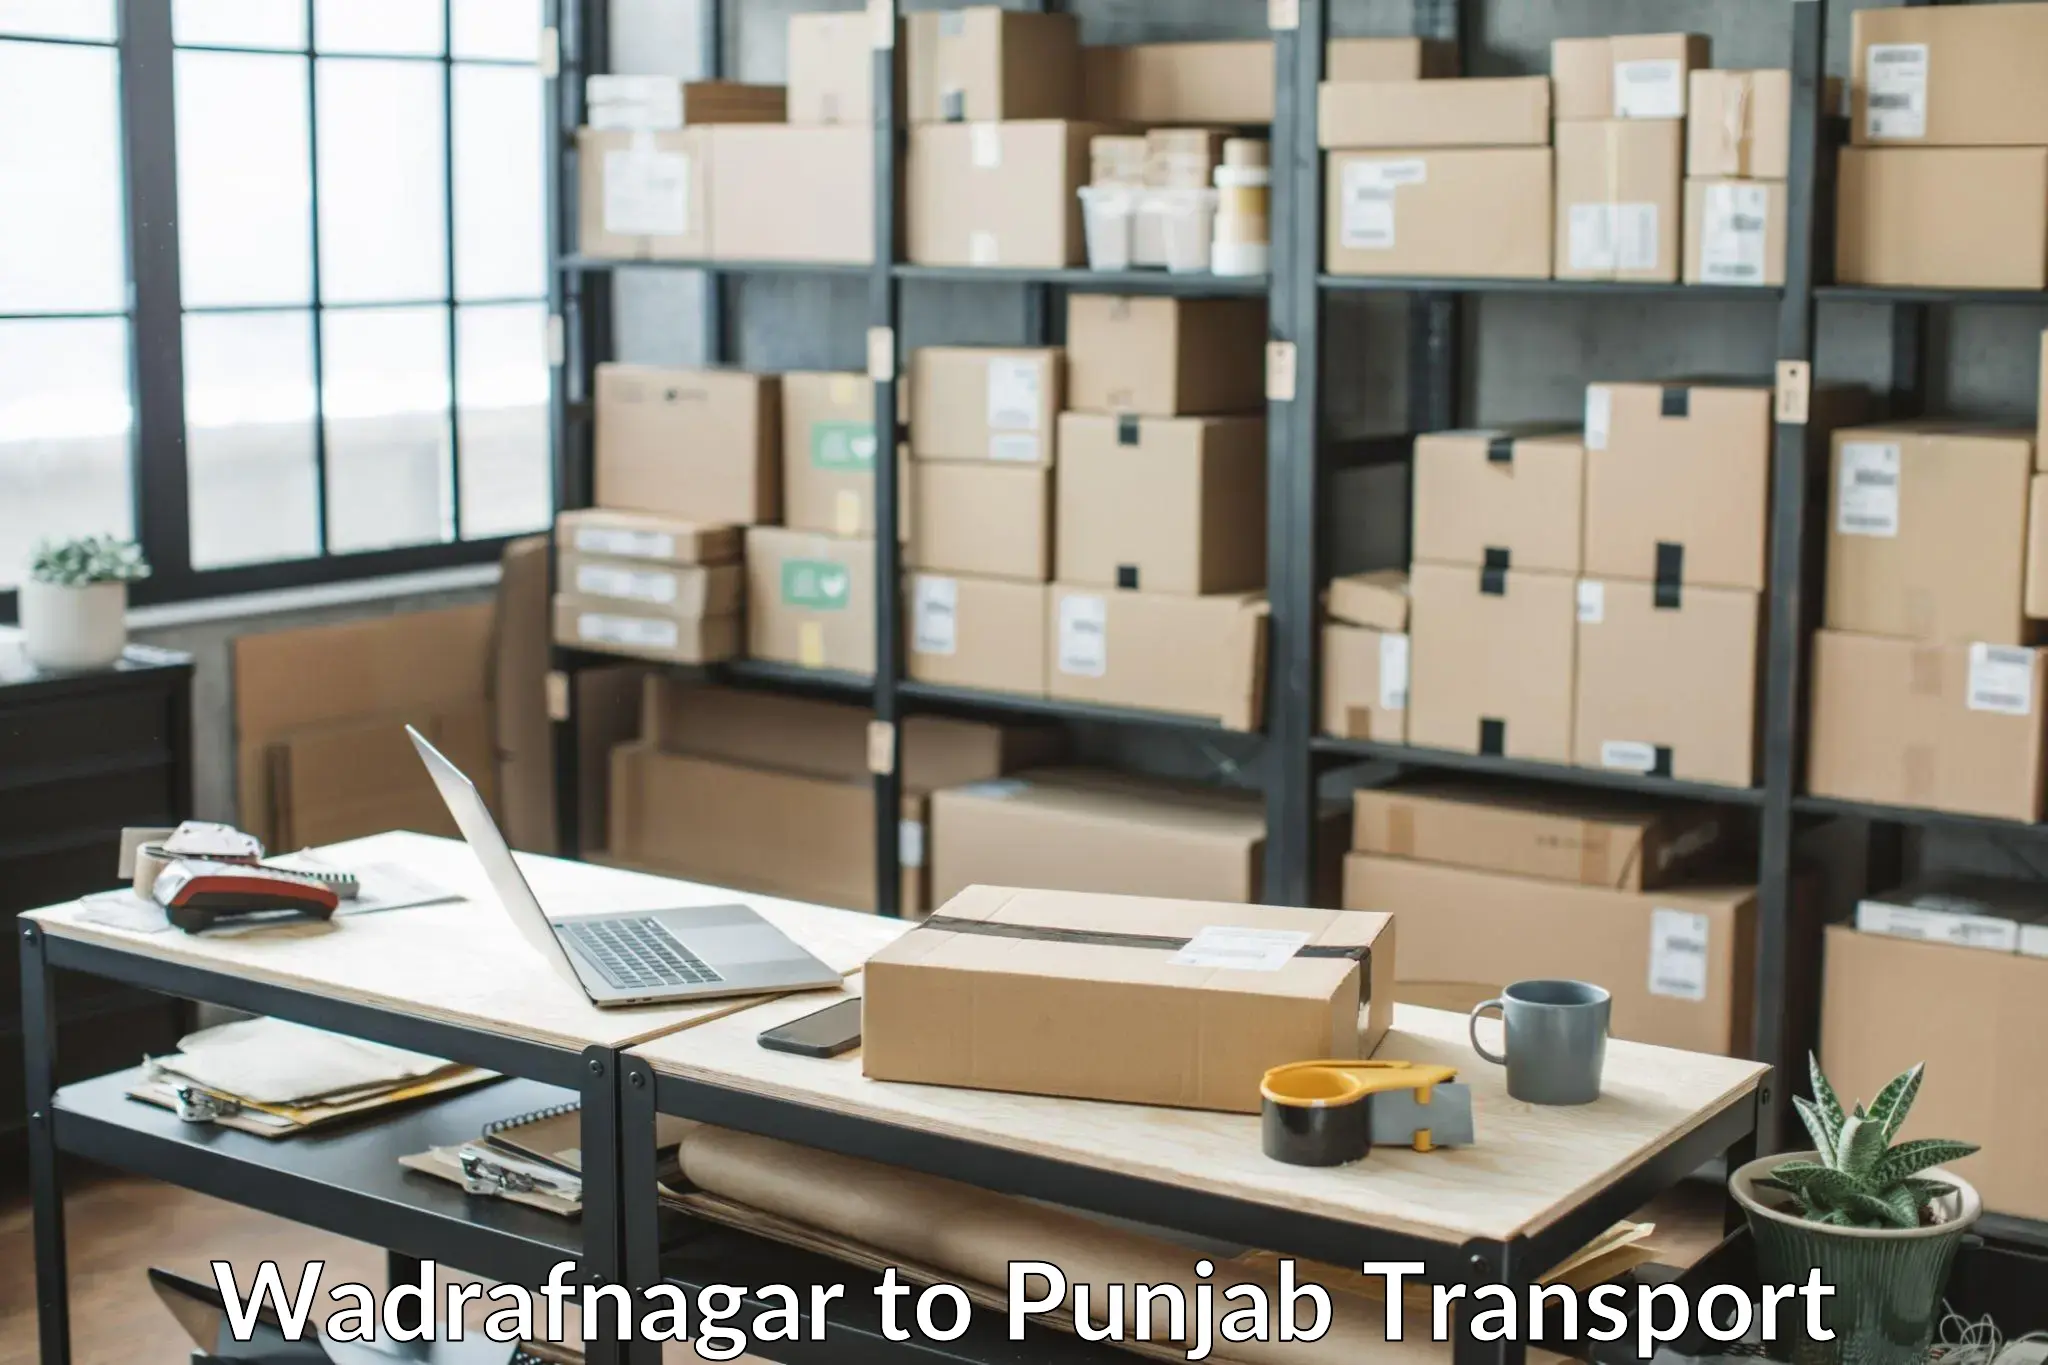 Online transport service Wadrafnagar to IIT Ropar